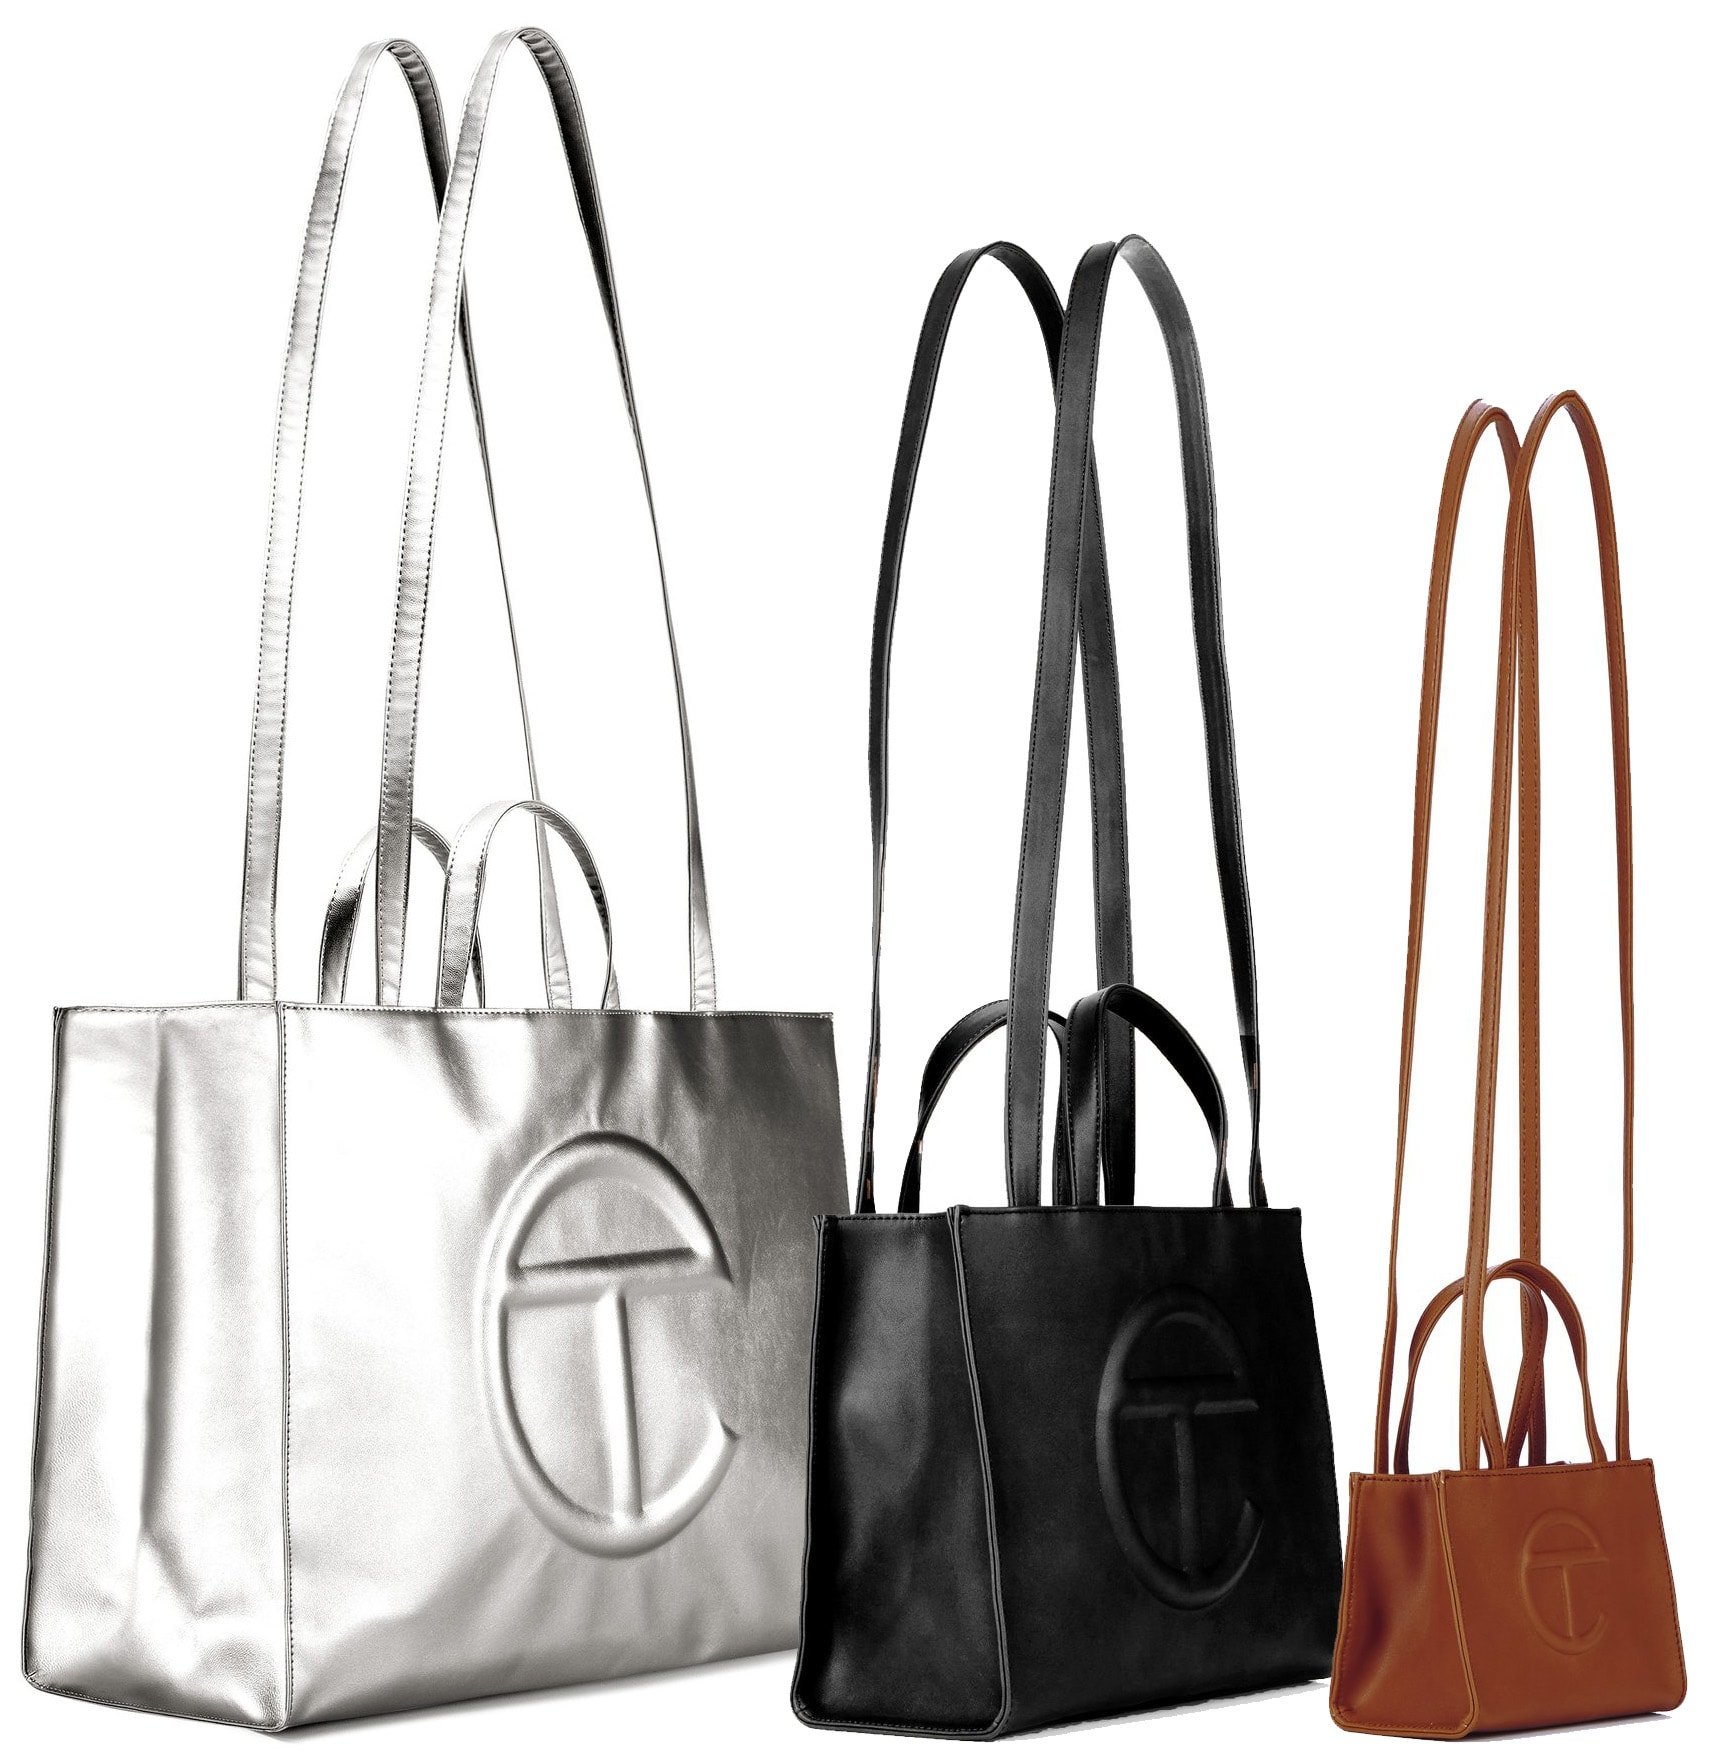 Telfar's popular vegan shopping bag comes in three sizes: small, medium, and large